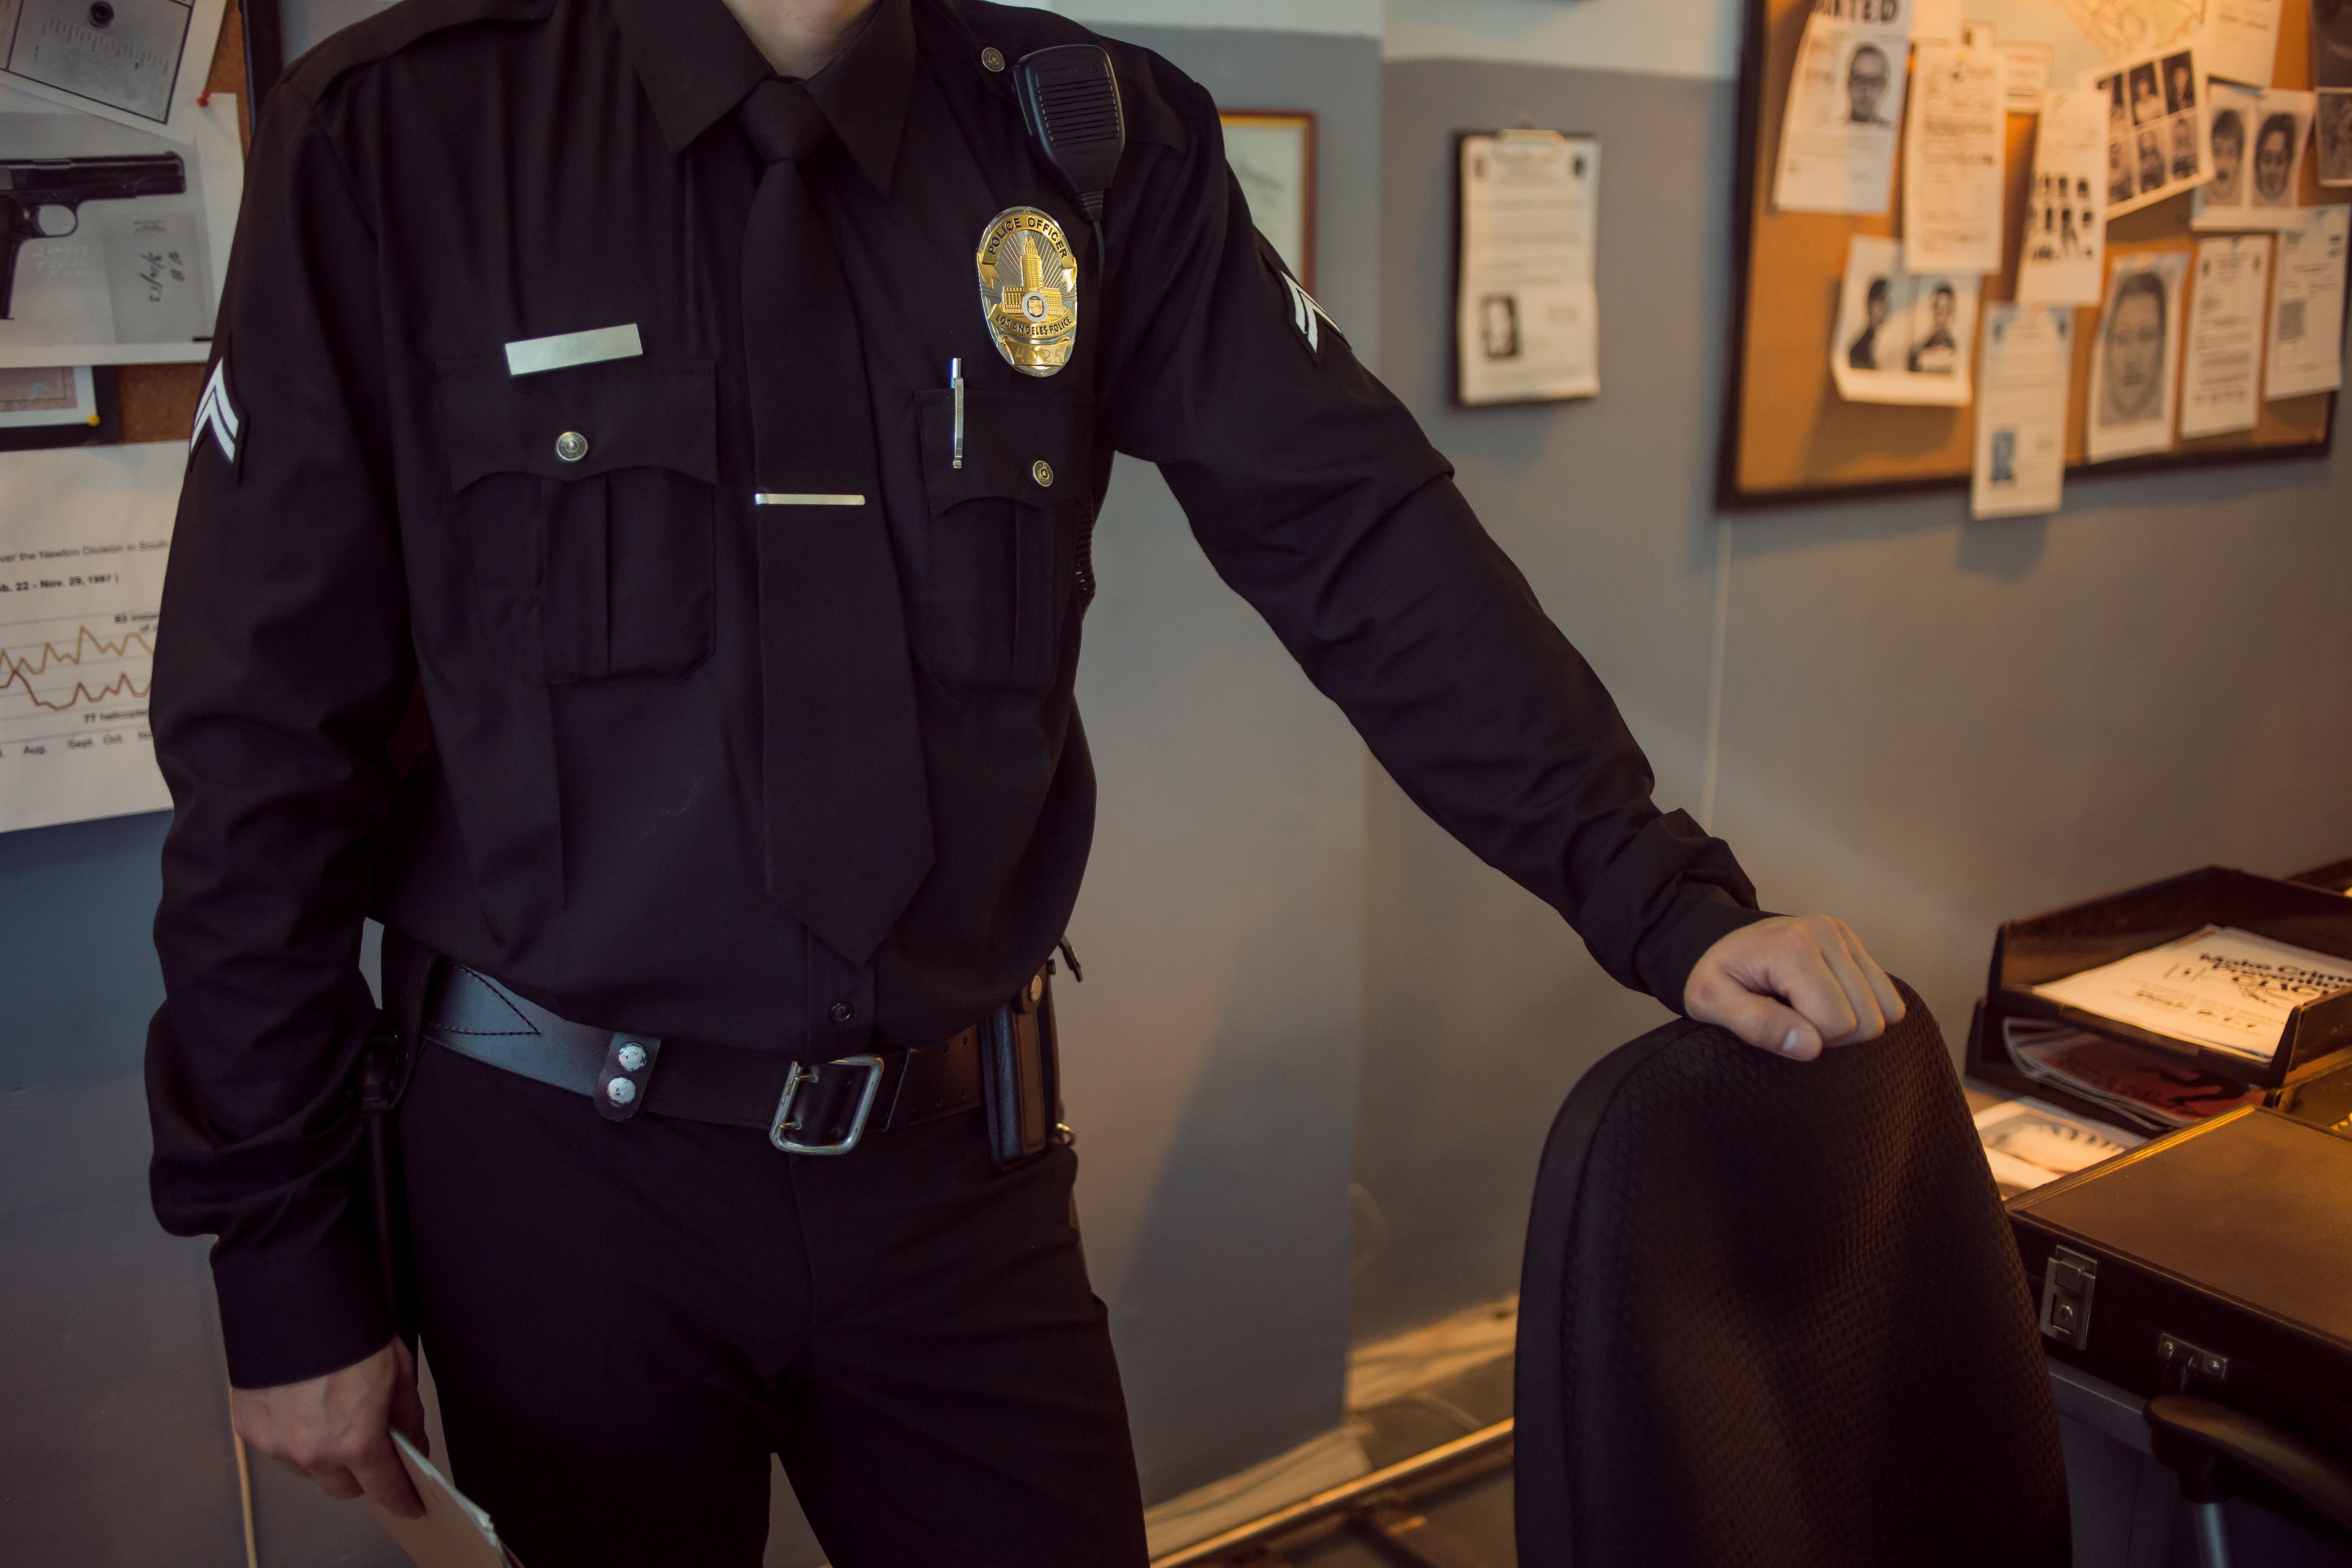 Police officer | Source: Shutterstock